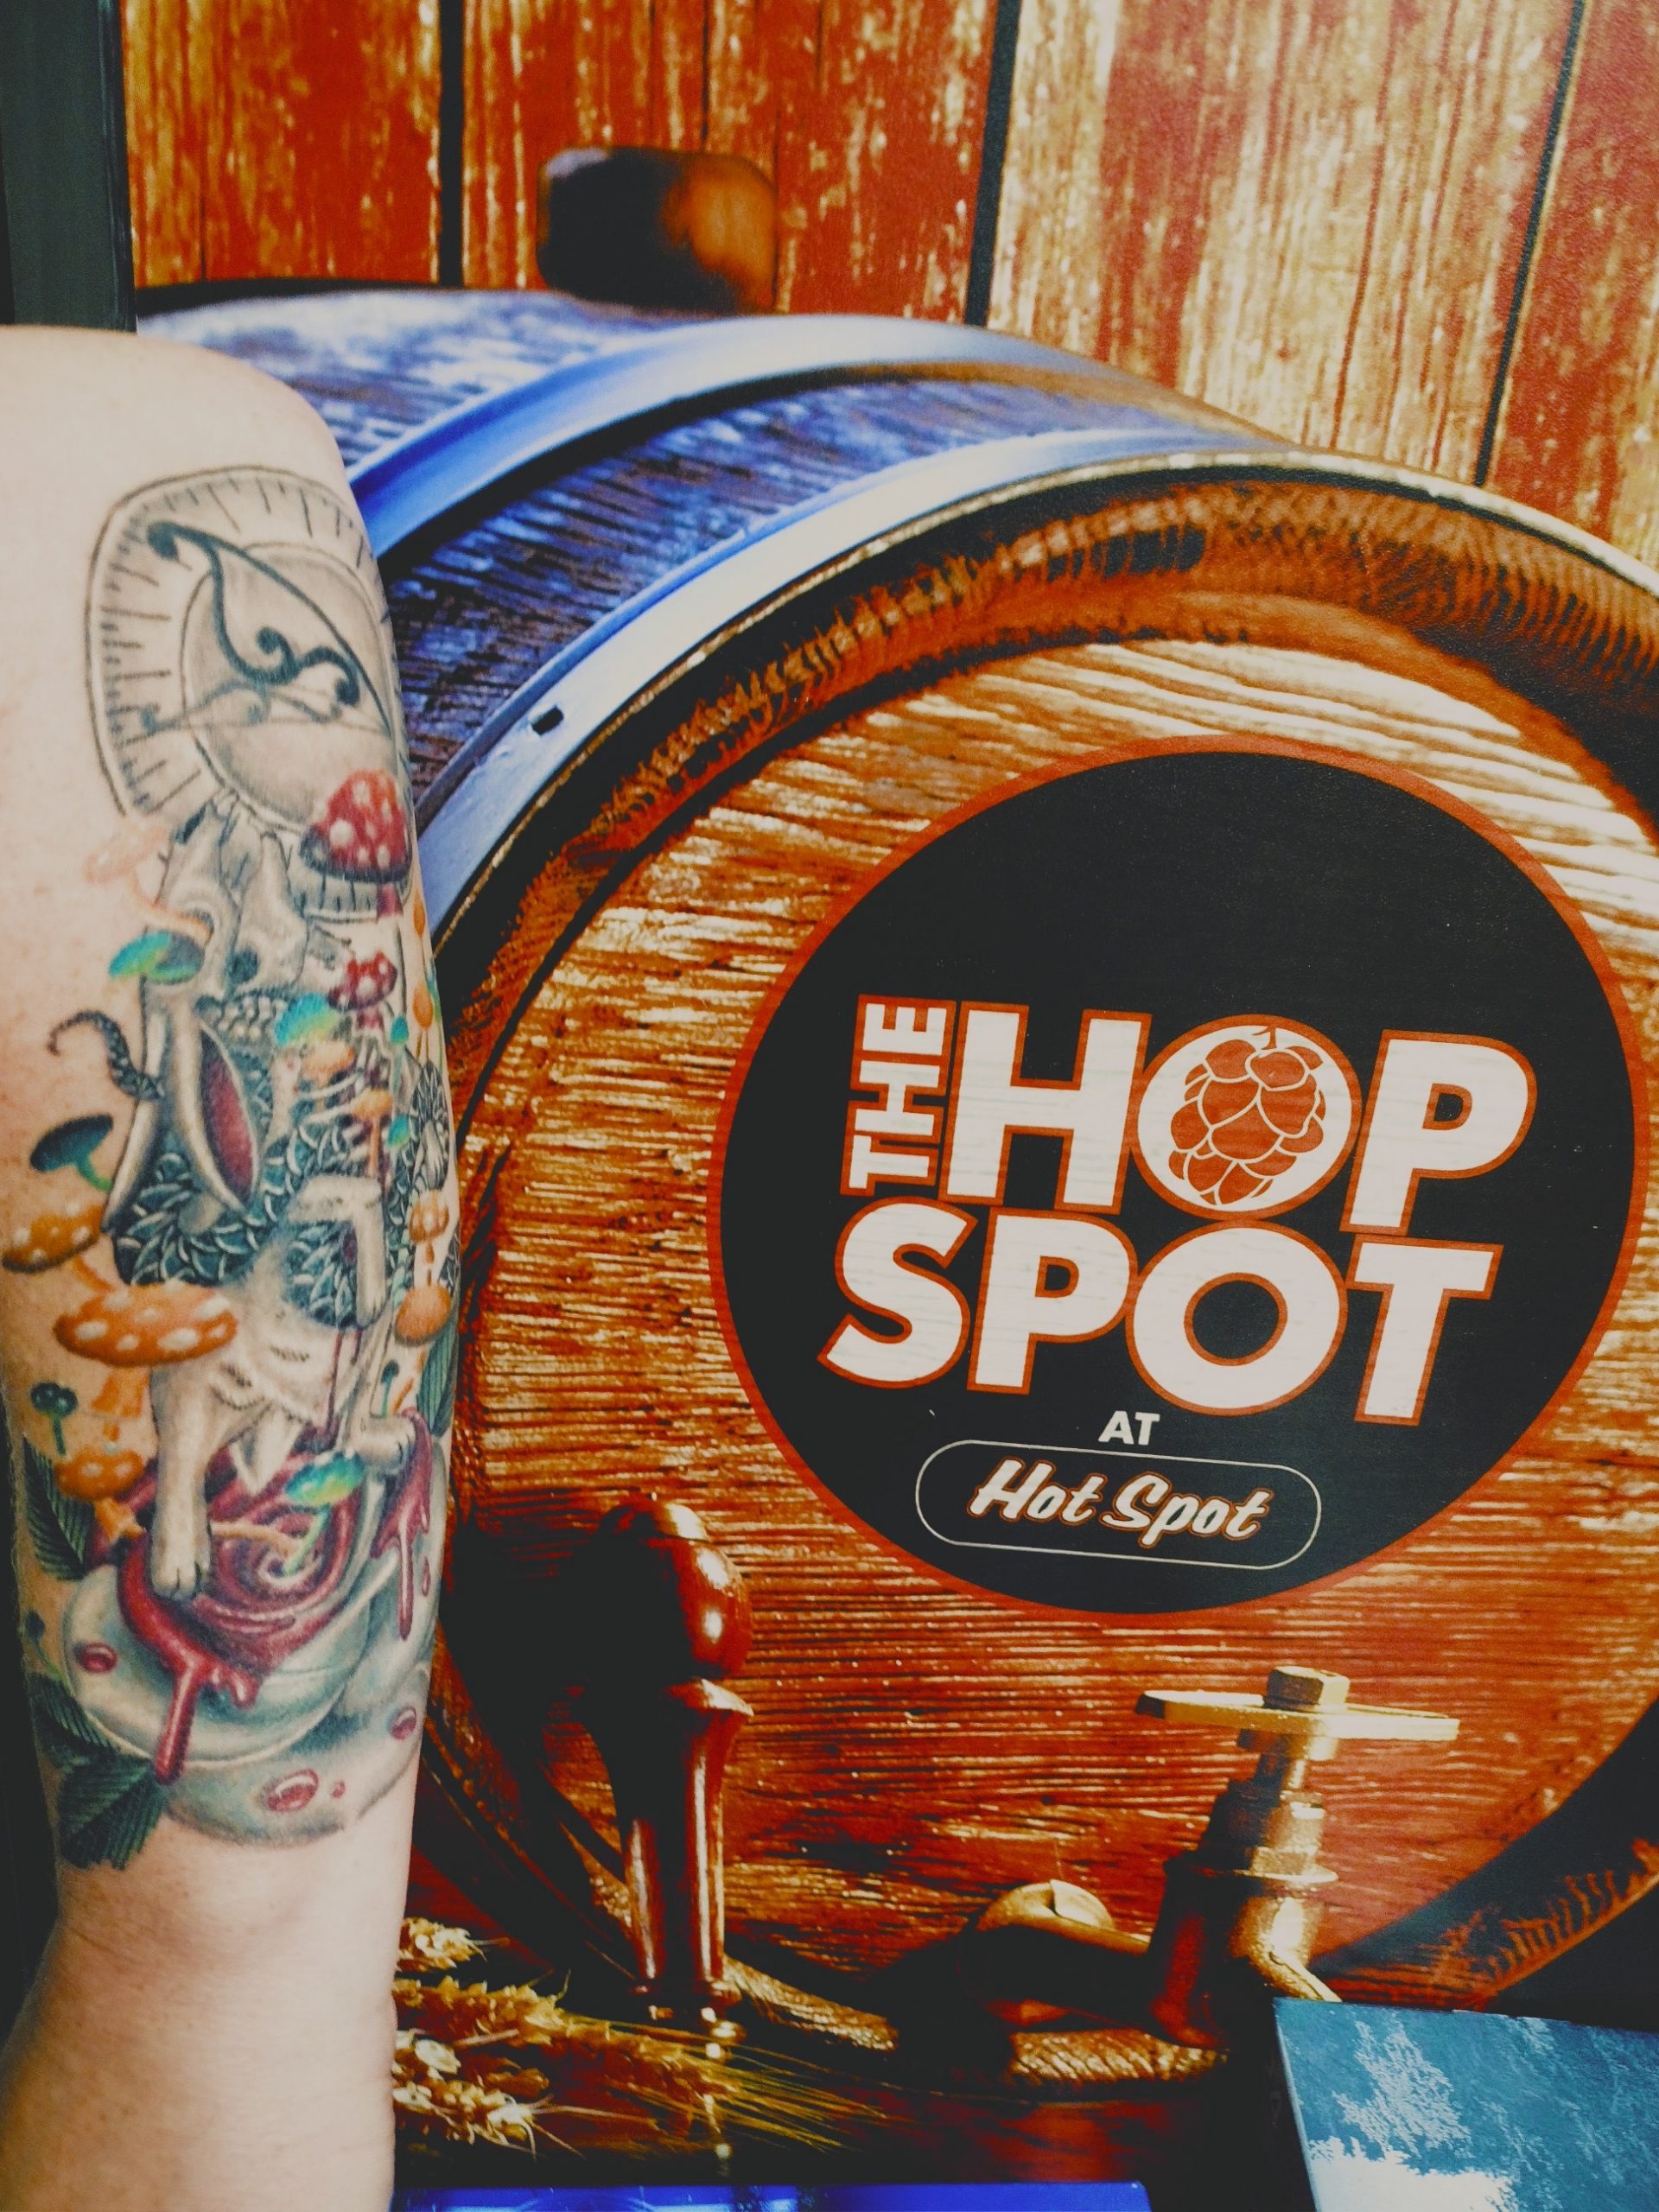 Hop Spot at Hot Spot named finalist for Best Craft Beer Store in Spartanburg South Carolina for 2023